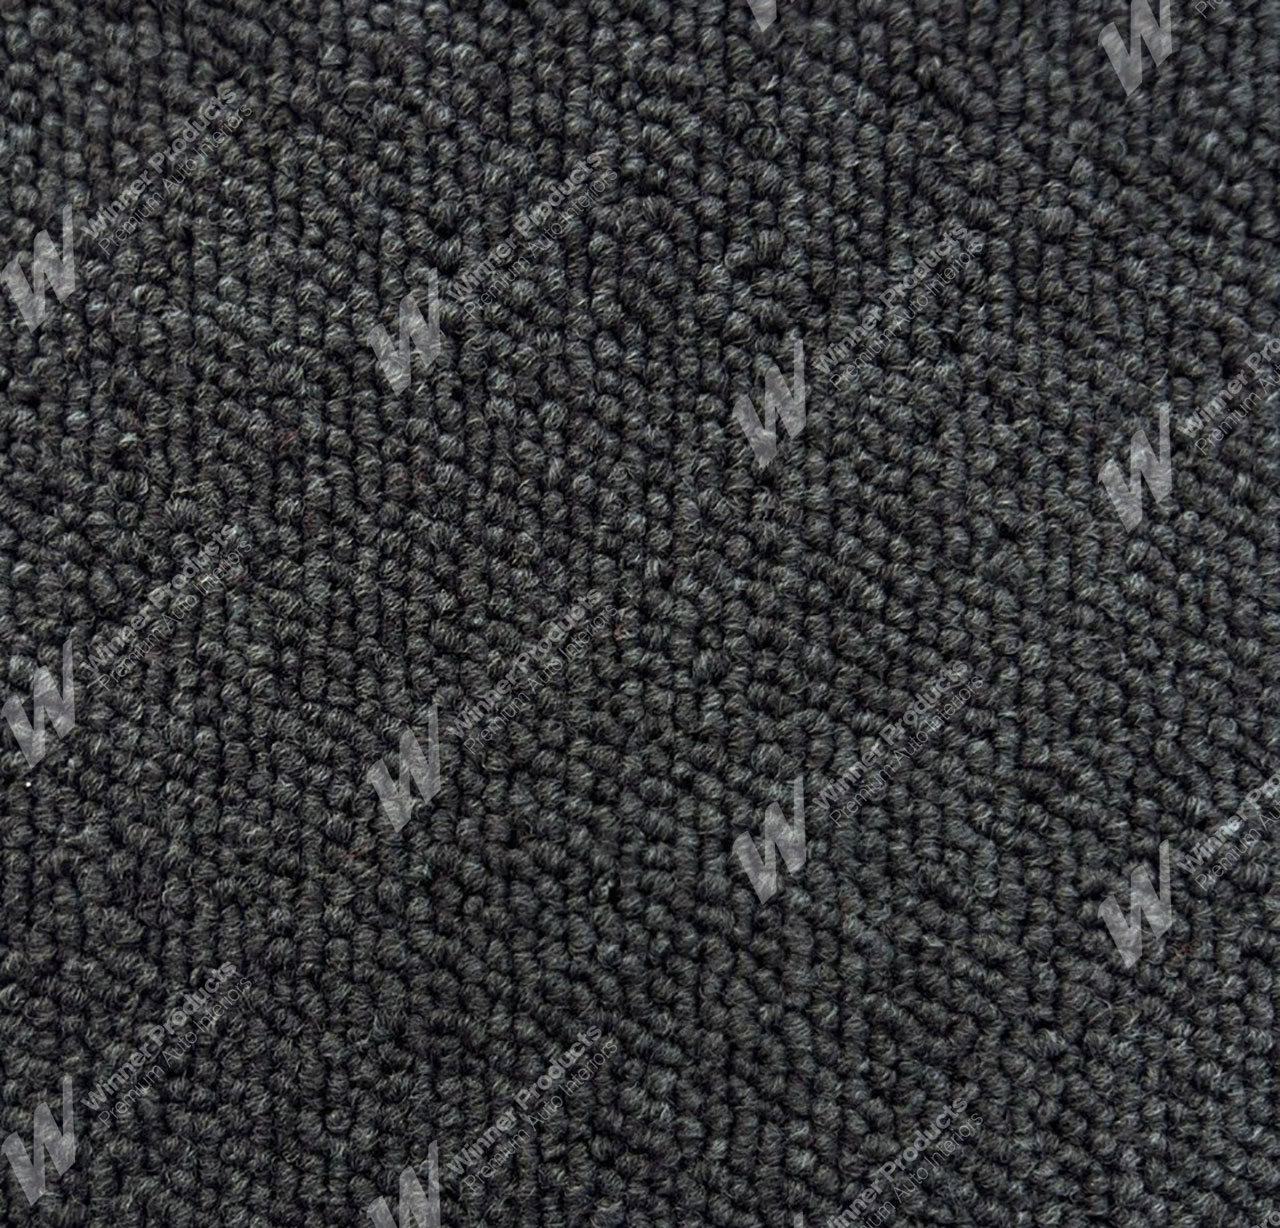 Holden Premier HQ Premier Sedan Mar73-74 35R Ash Carpet (Image 1 of 1)